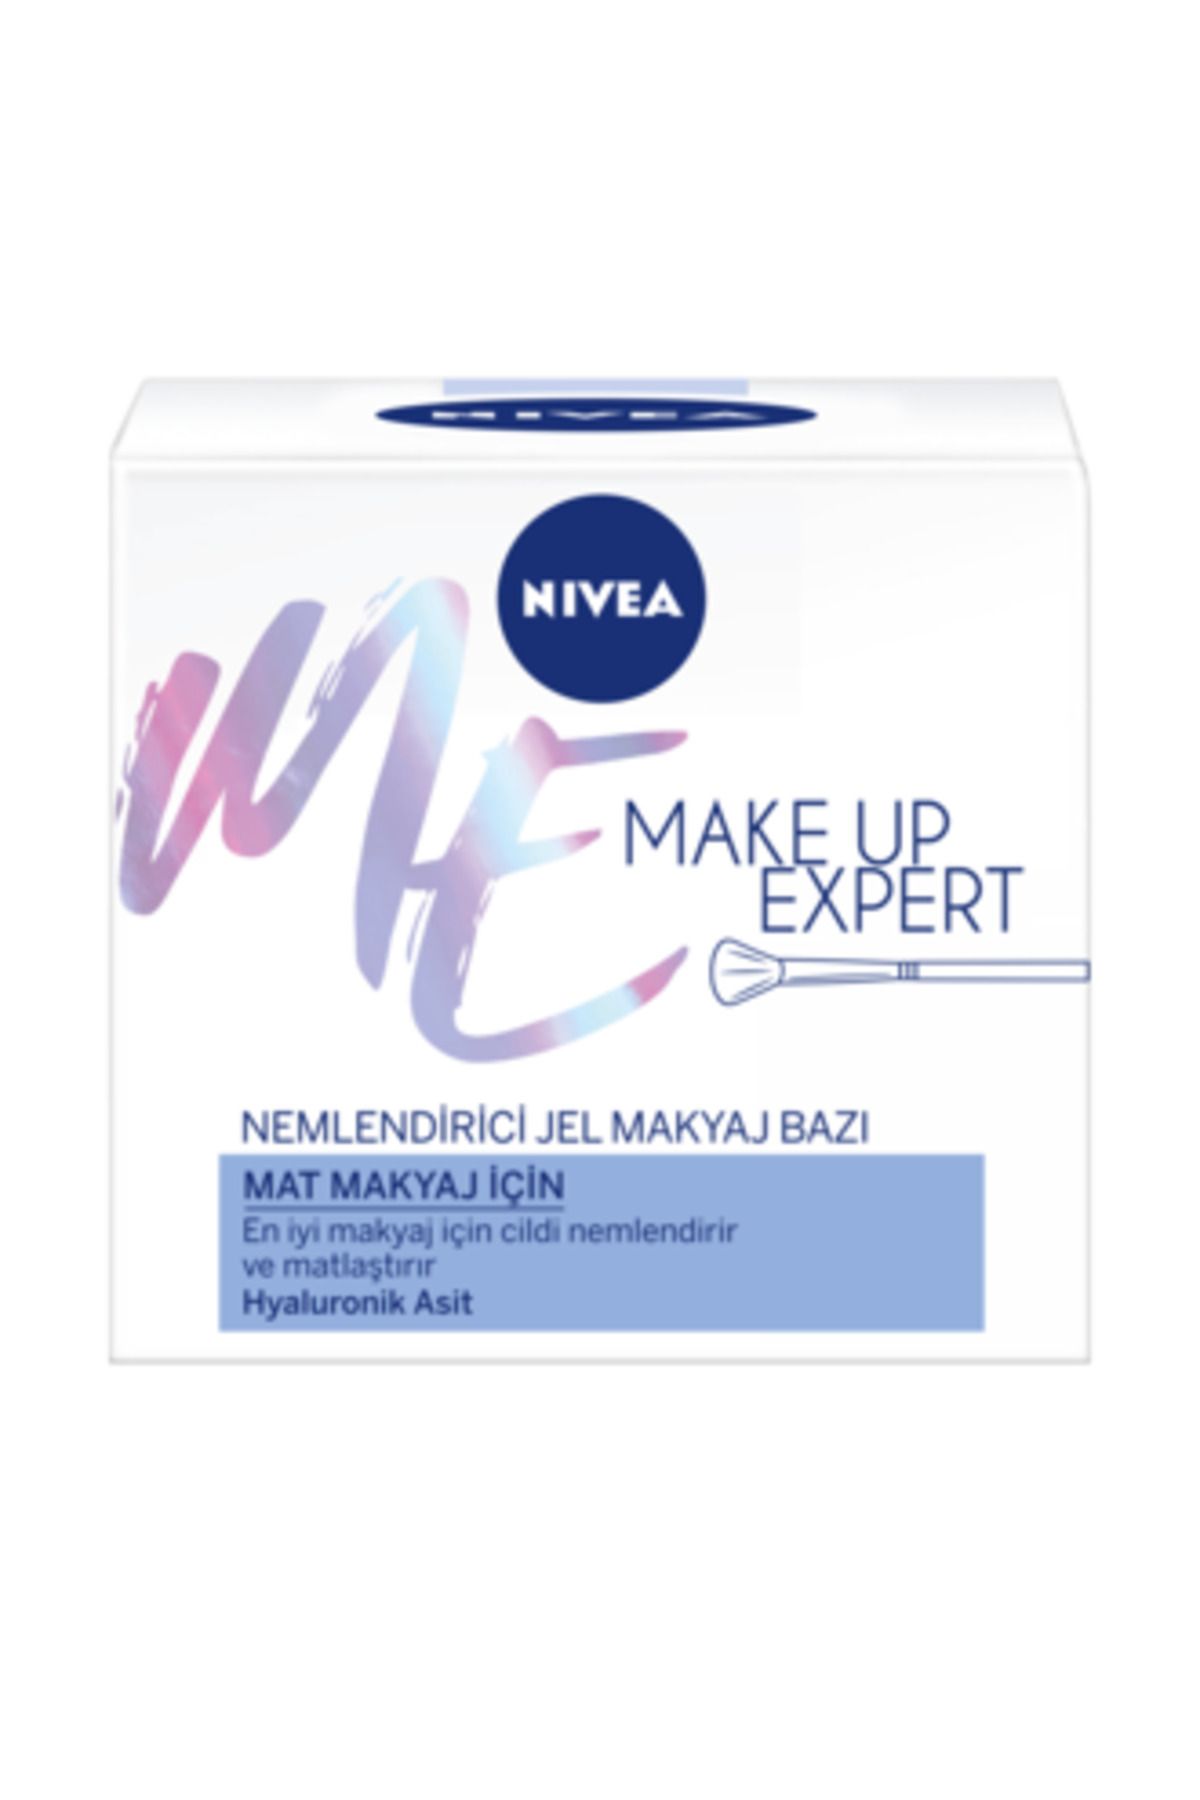 NIVEA گل آرایش مات حرفه ای مخصوص مات مکاپ اکسپرت نیوآ